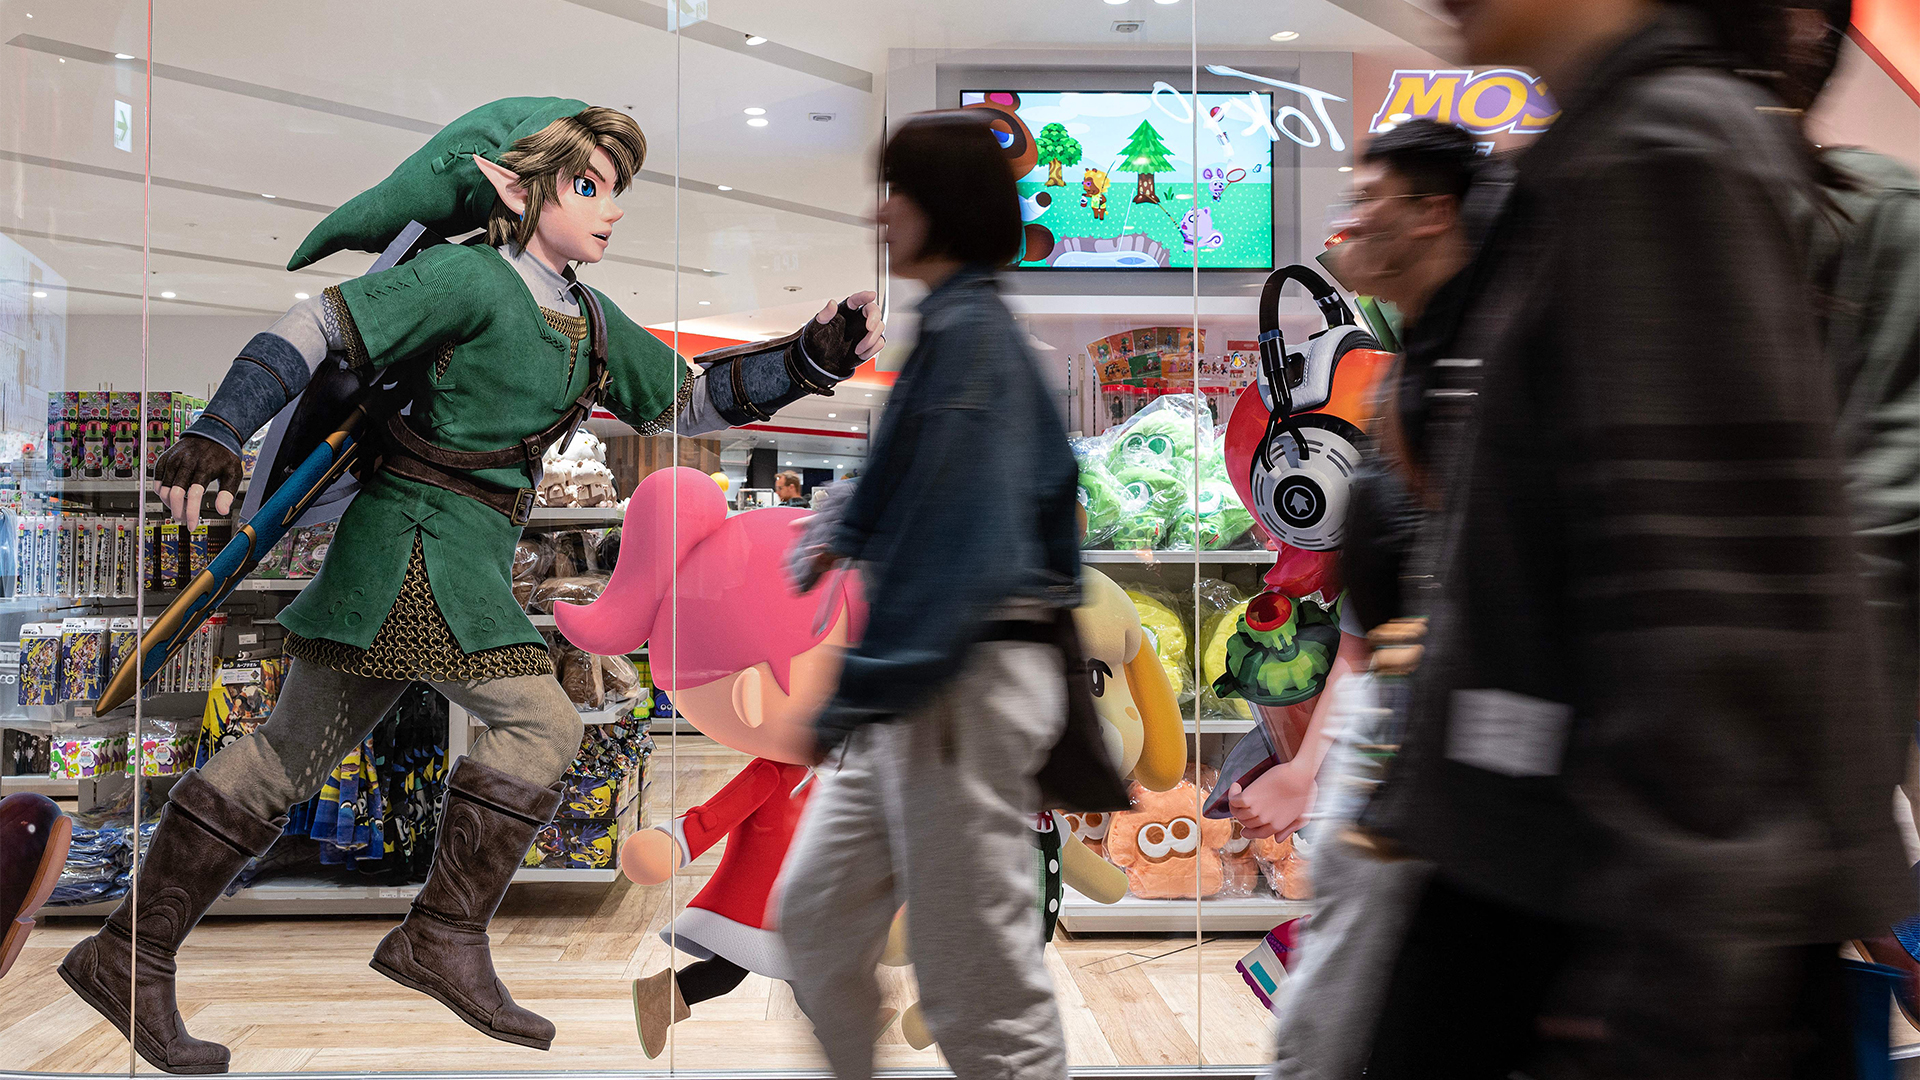 Nintendo Announces 'Legend of Zelda' Live Action Movie